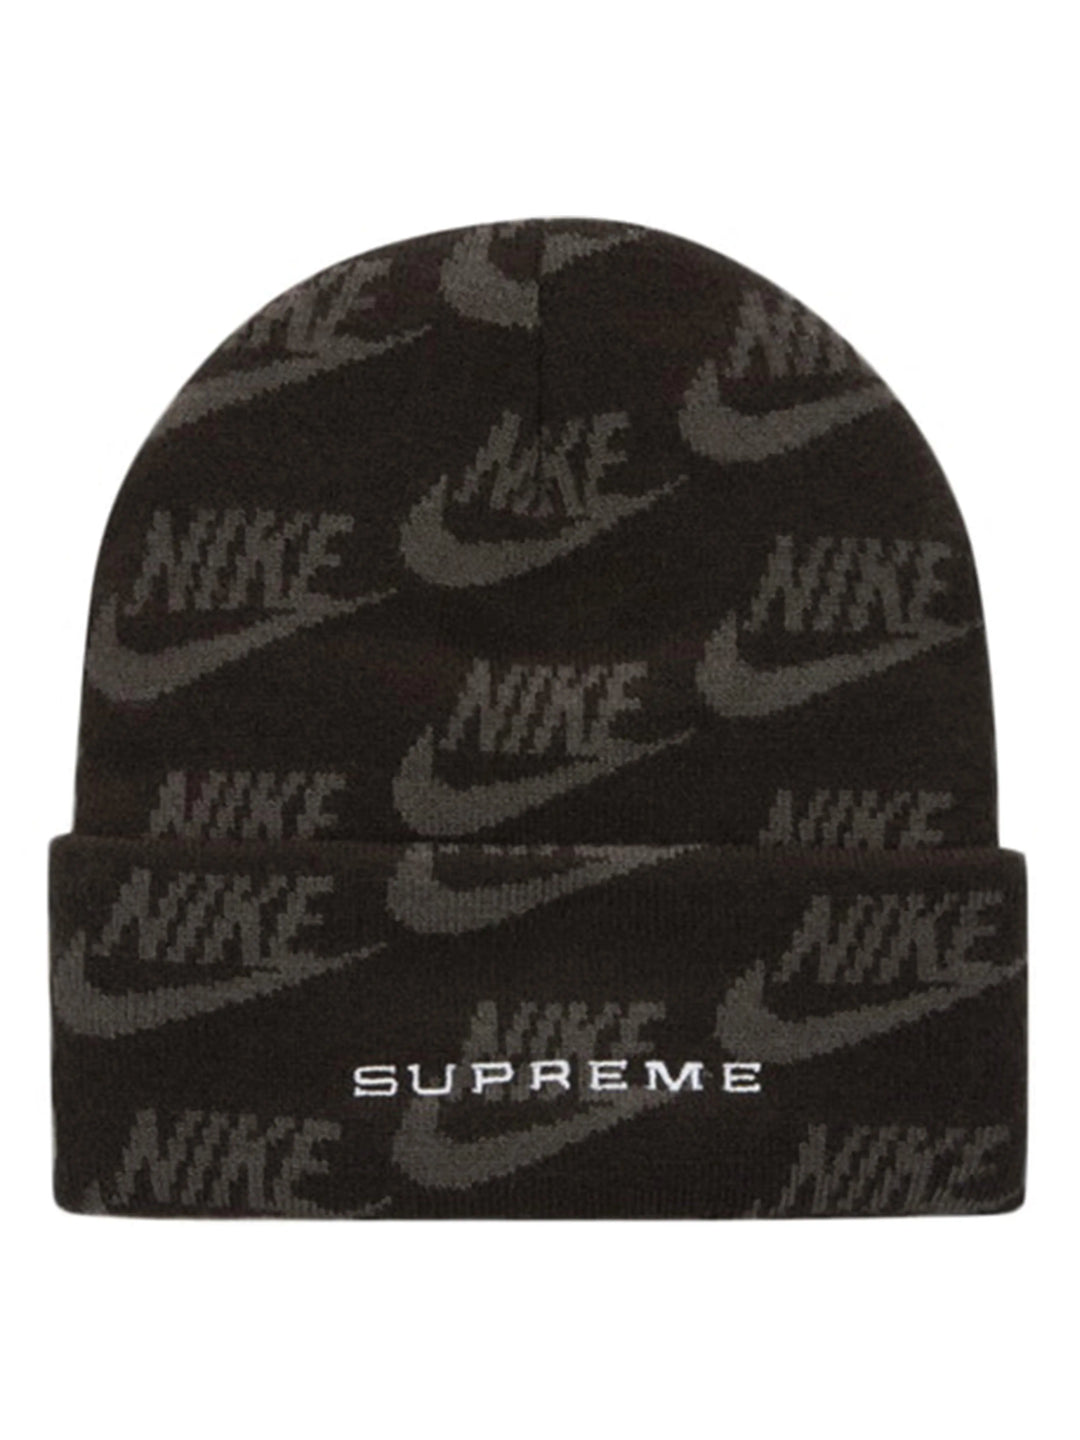 Supreme Nike Jacquard Logos Beanie Black [SS21] Prior